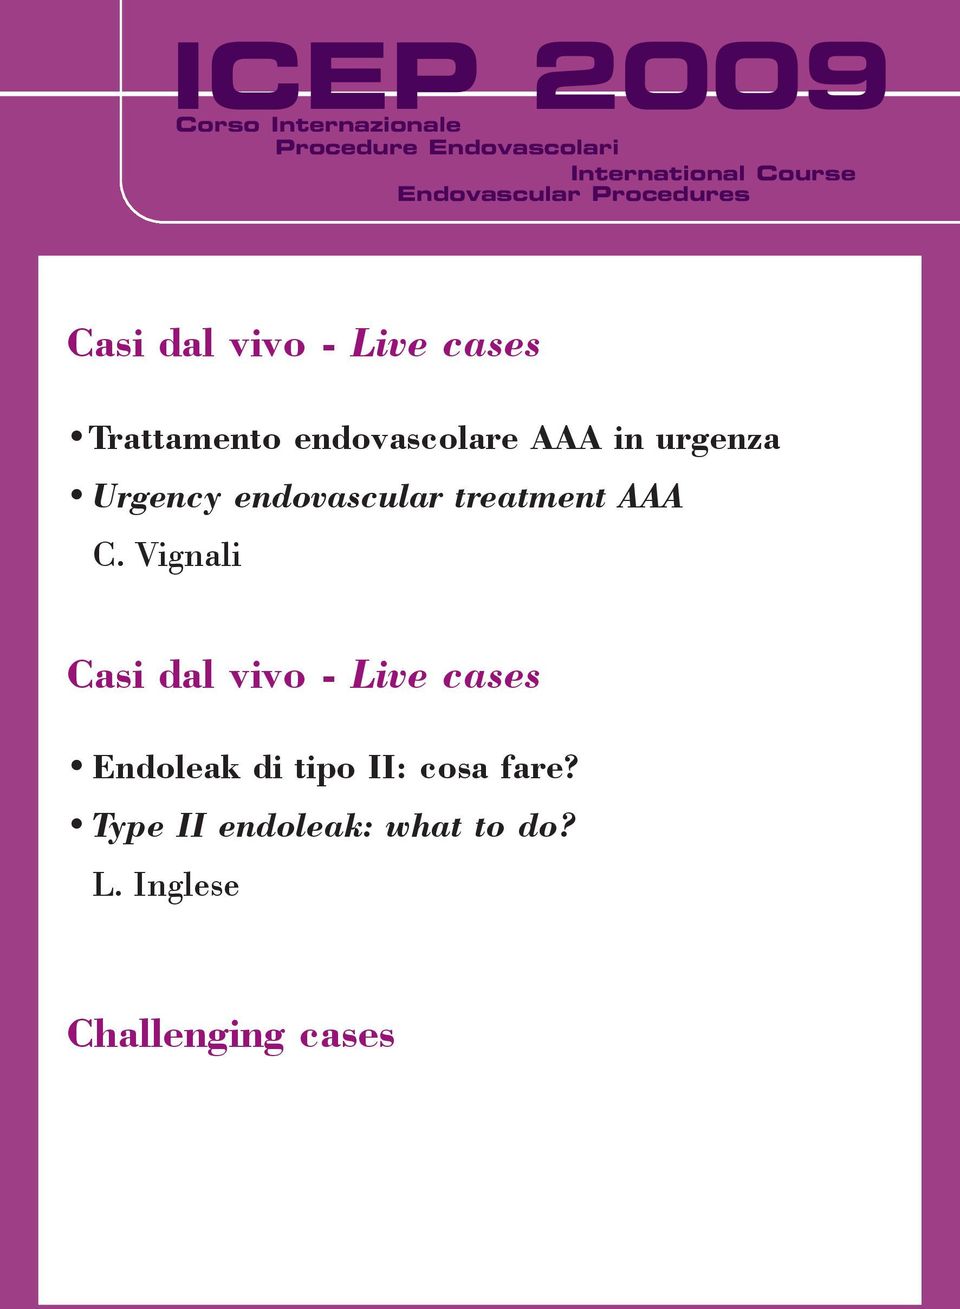 urgenza Urgency endovascular treatment AAA C.